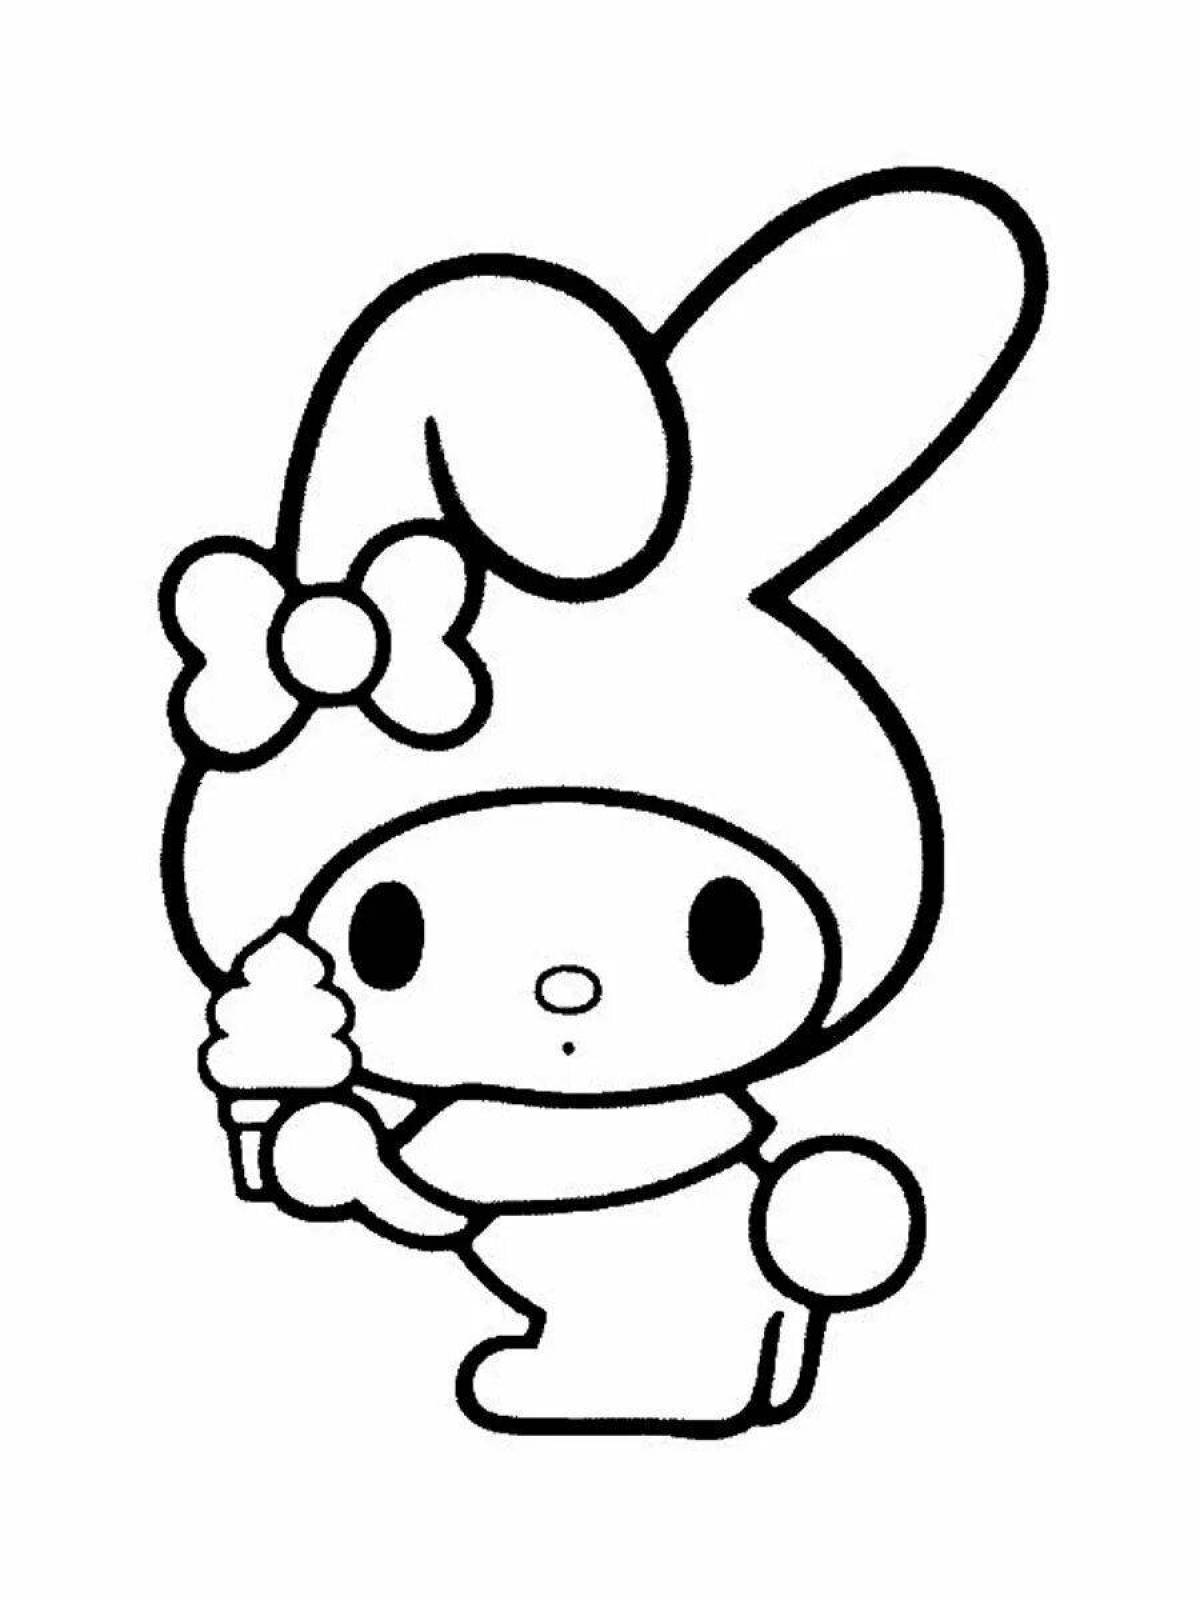 Cute hello kitty bunny coloring book